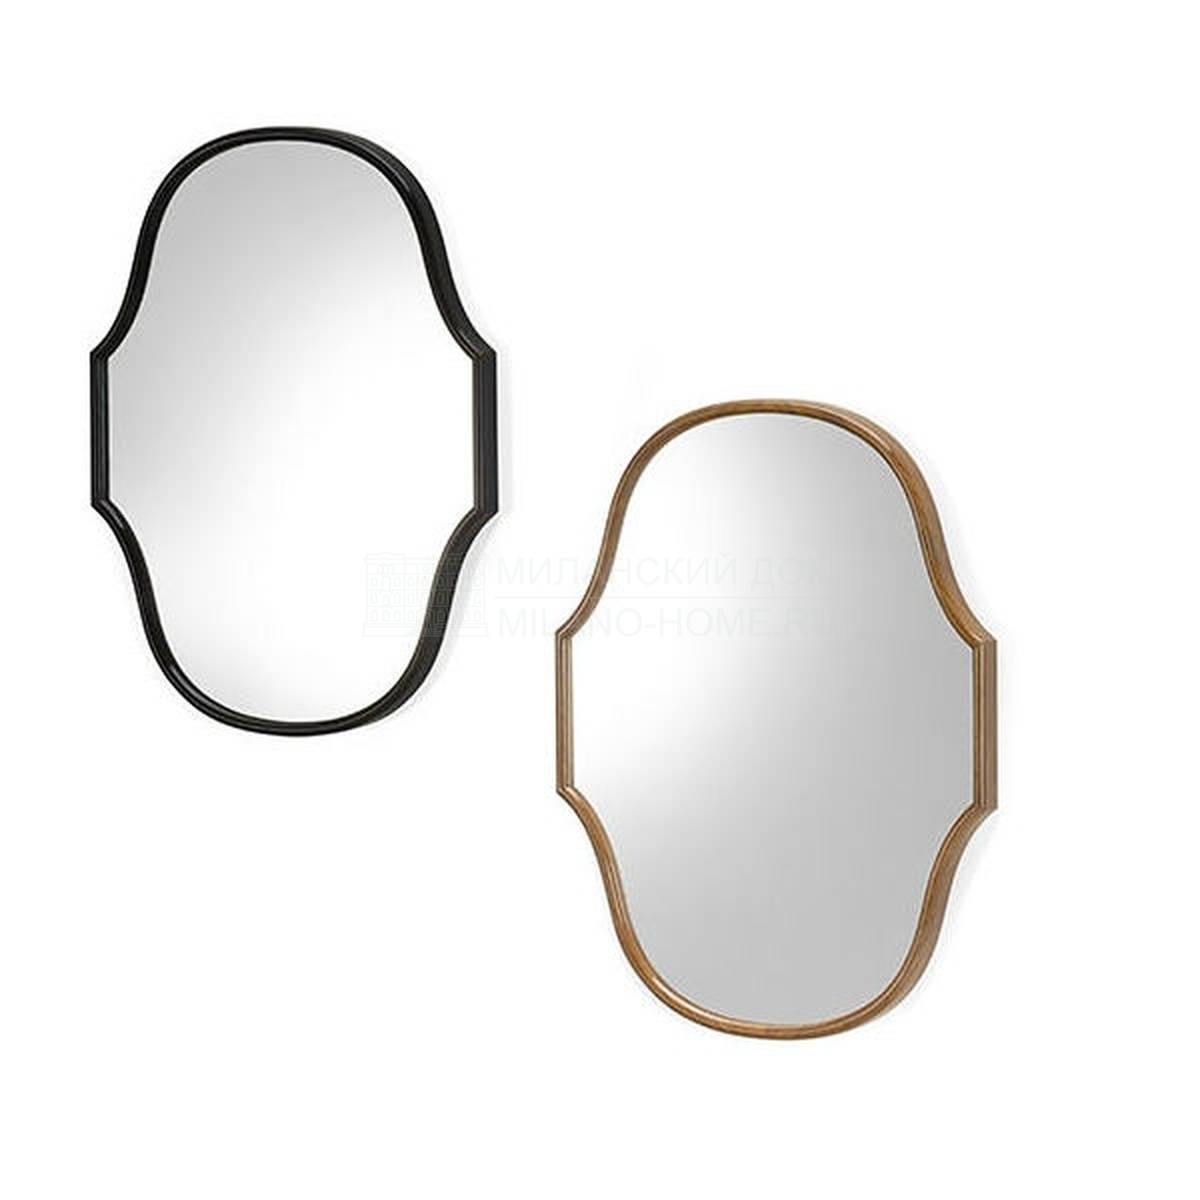 Зеркало настенное Face mirror из Италии фабрики CECCOTTI